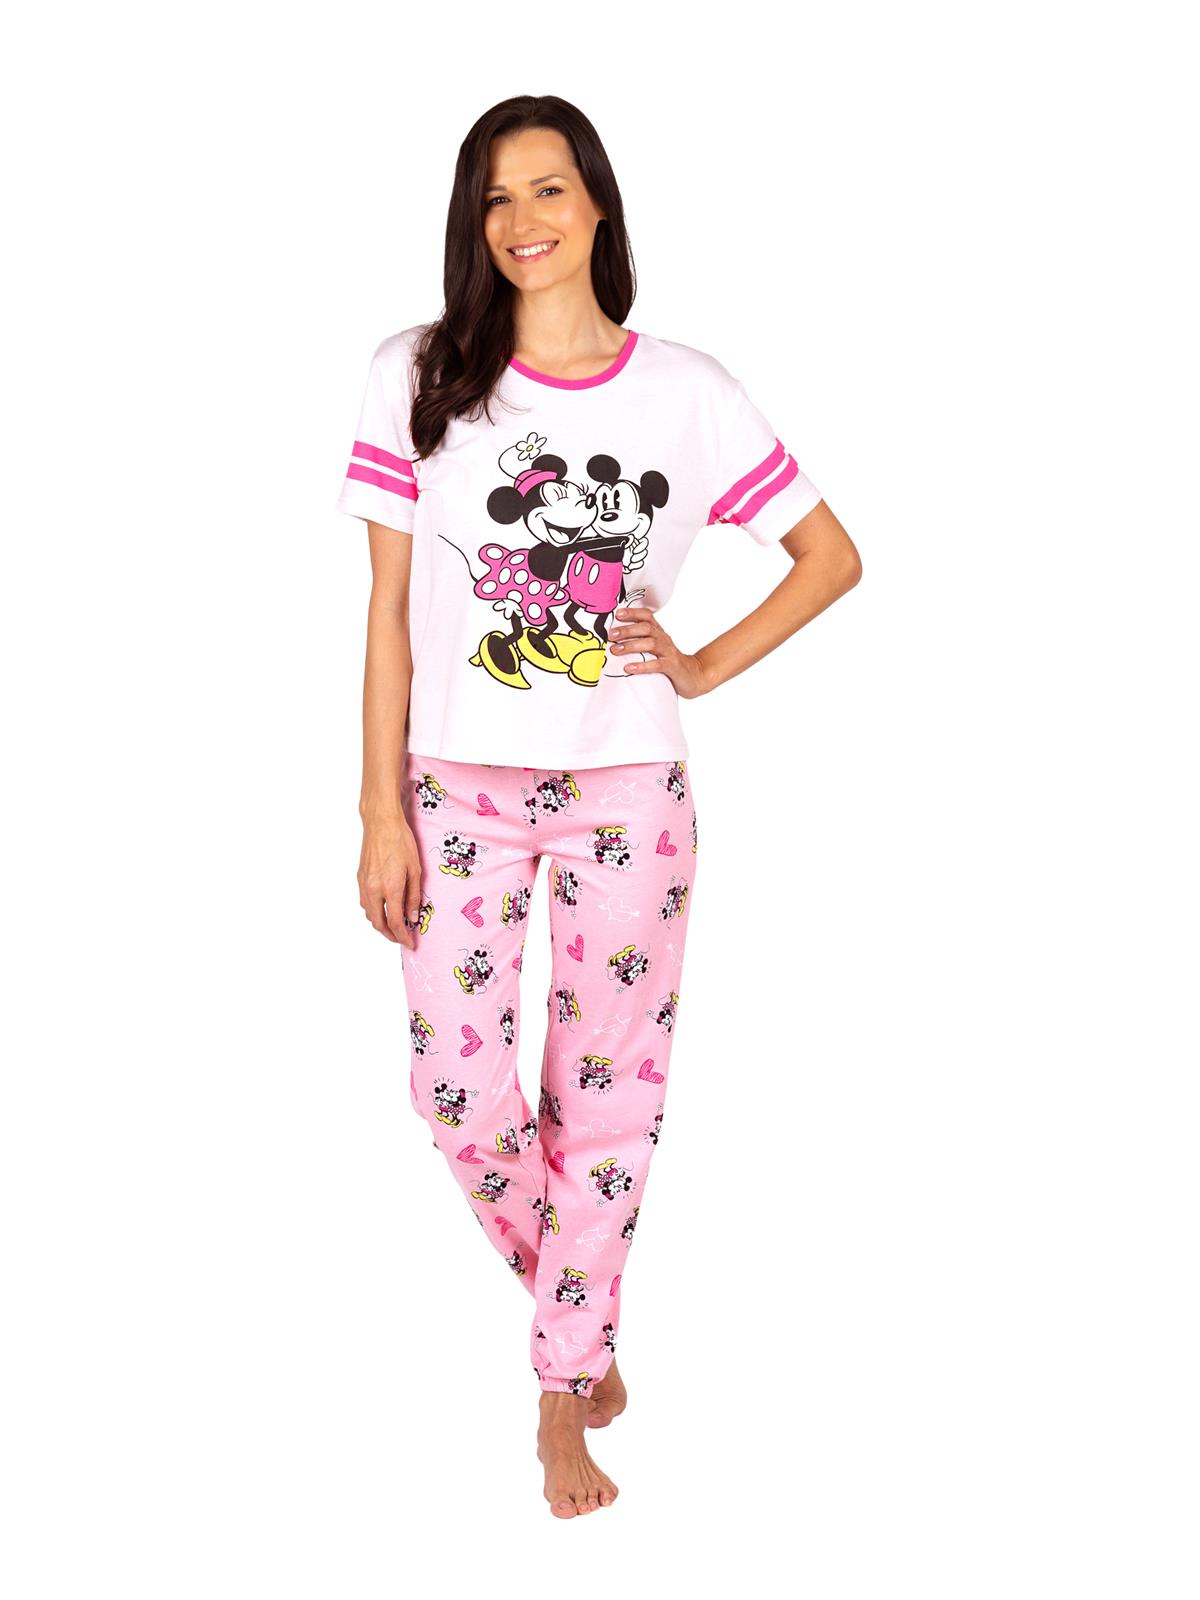 Shop Women's Pyjamas & Sleepwear